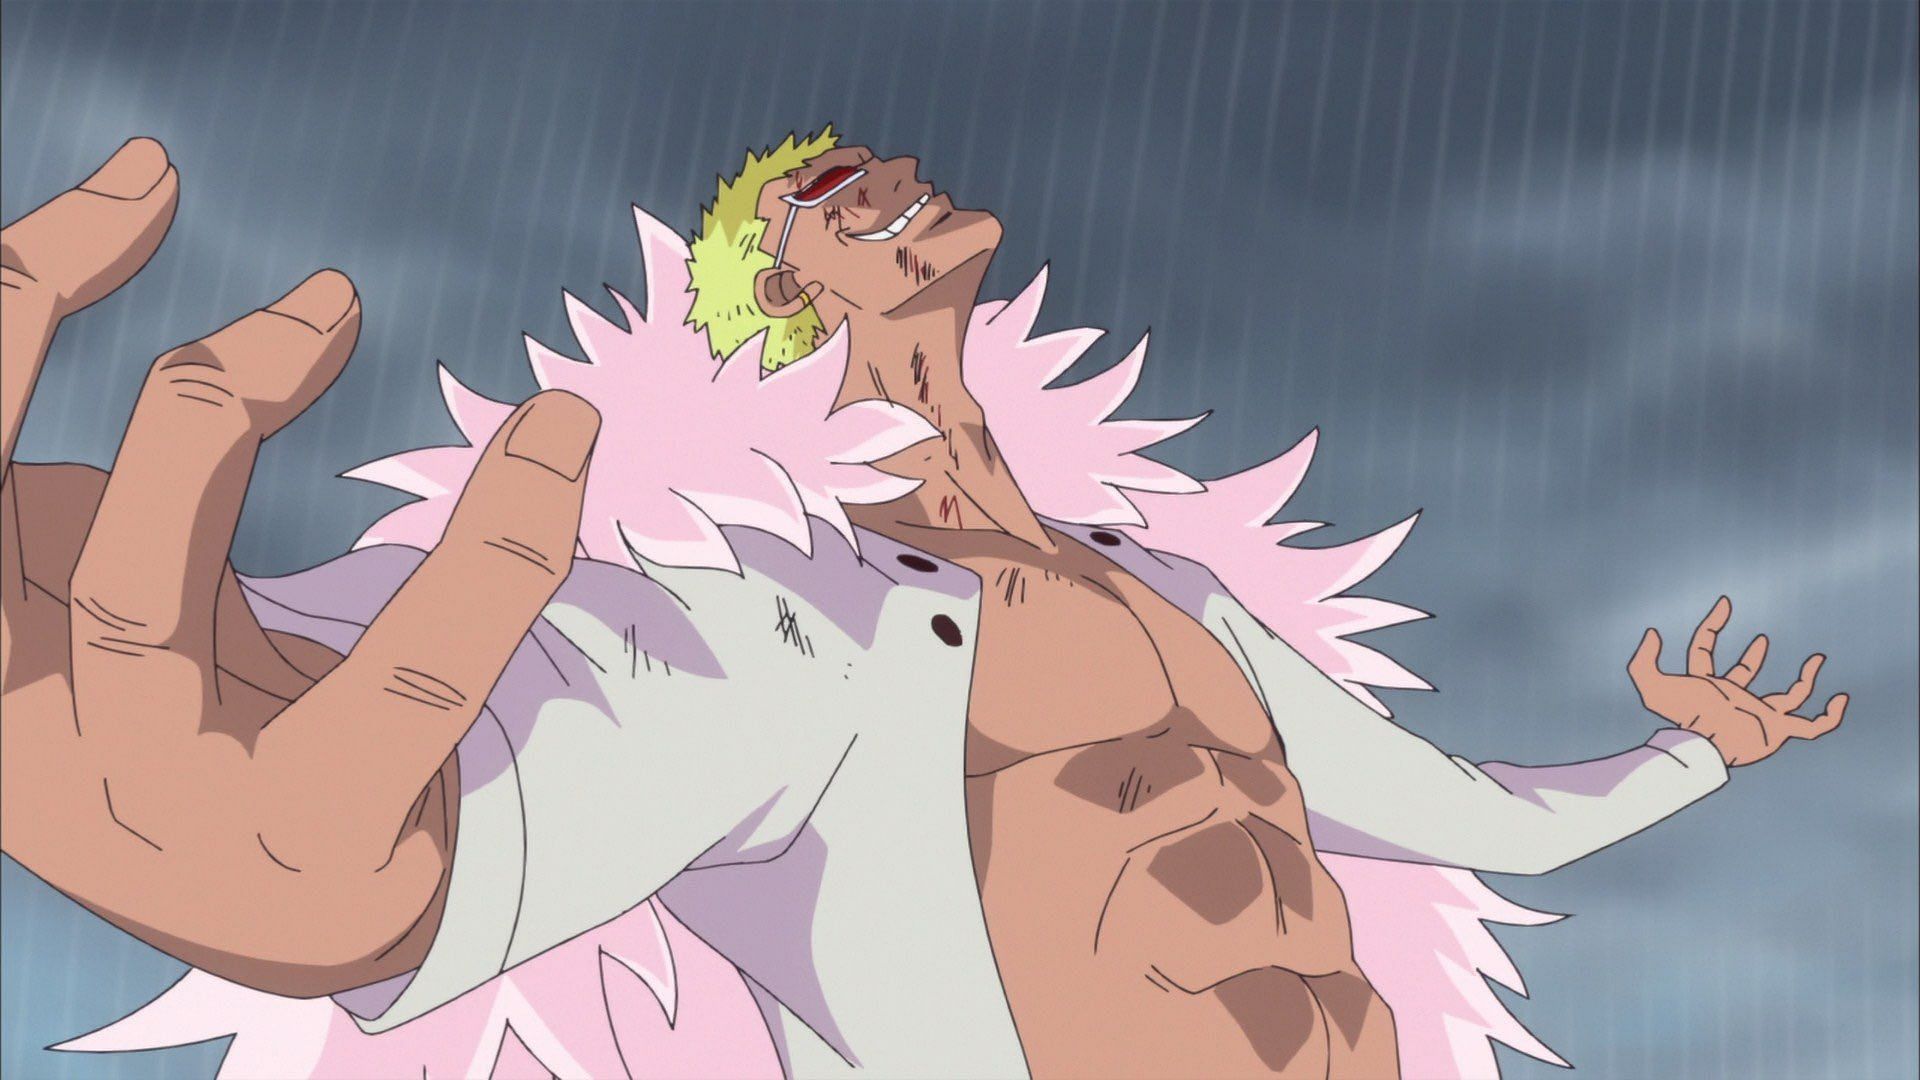 Doflamingo as seen in One Piece (Image via Toei Animation)